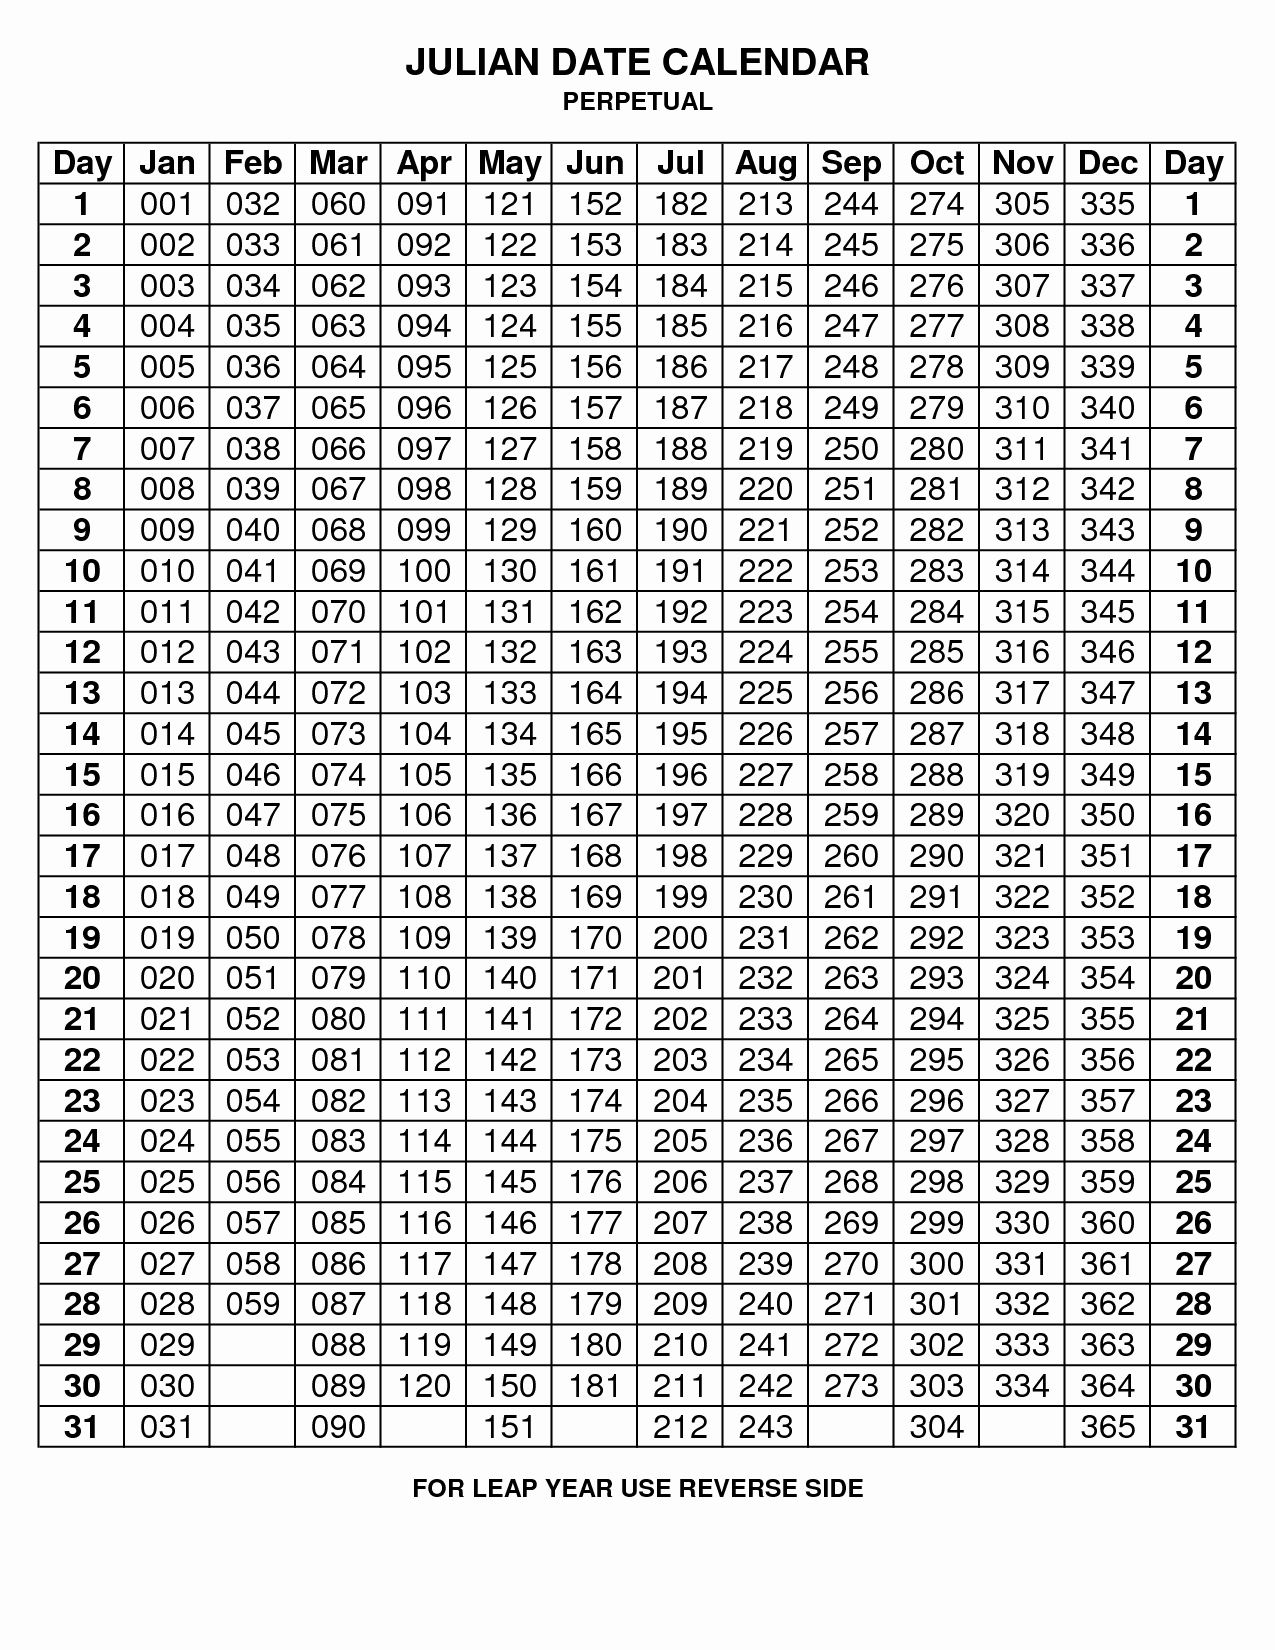 Depo Provera Perpetual Calendar To Print - Calendar  Depo-Provera Perpetual Calendar 2021